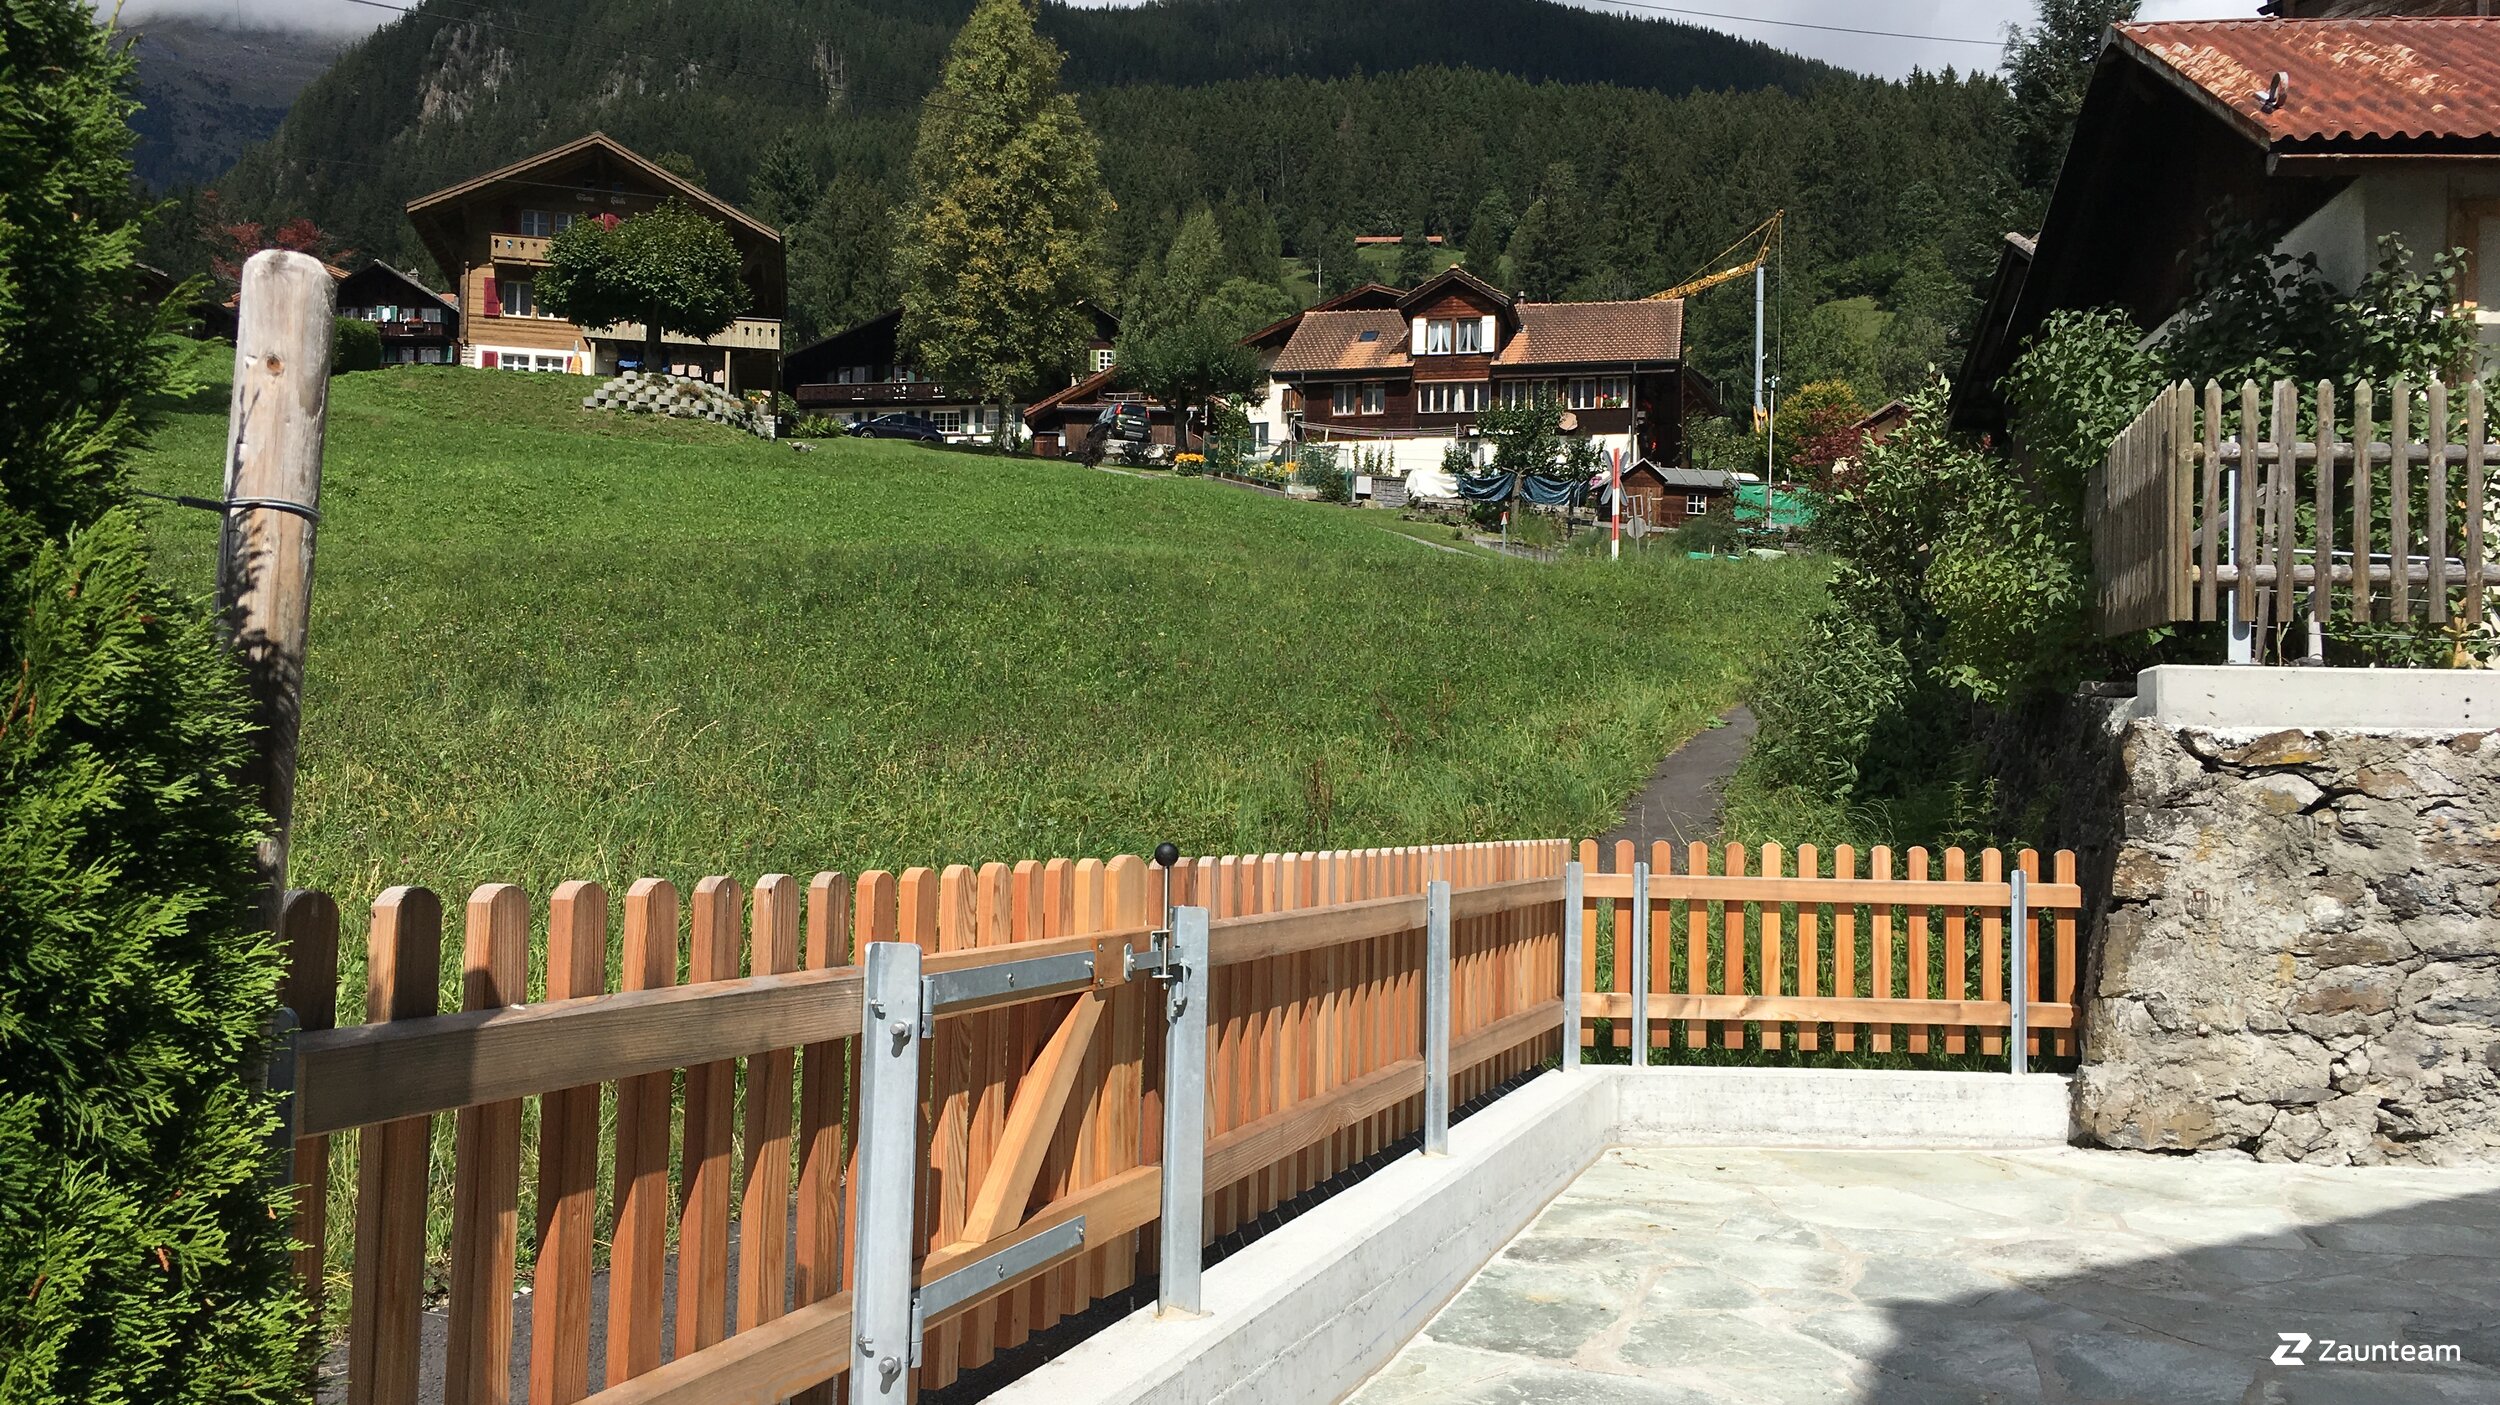 Protection brise-vue en bois de 2017 à 3818 Grindelwald Suisse de Zaunteam Berner Oberland.